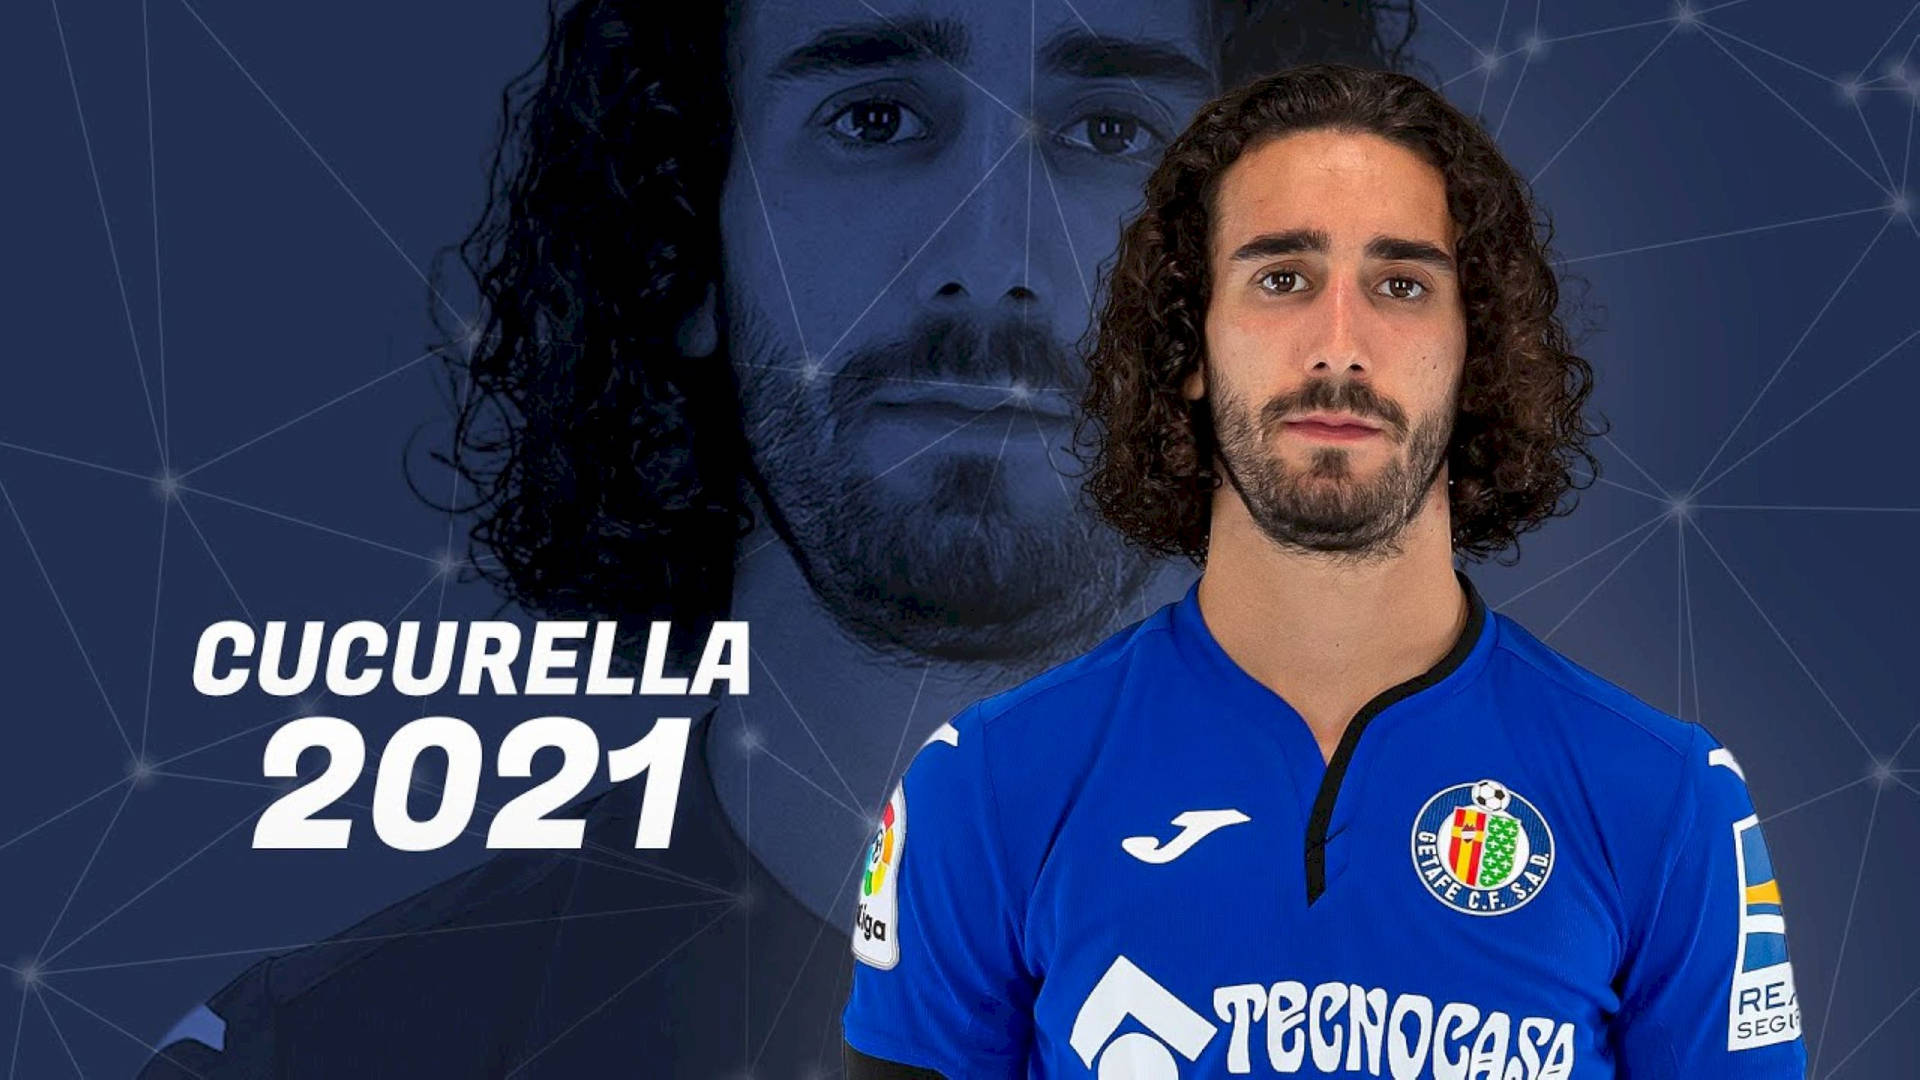 Marccucurella 2021 Chelsea - Marc Cucurella 2021 Chelsea Wallpaper